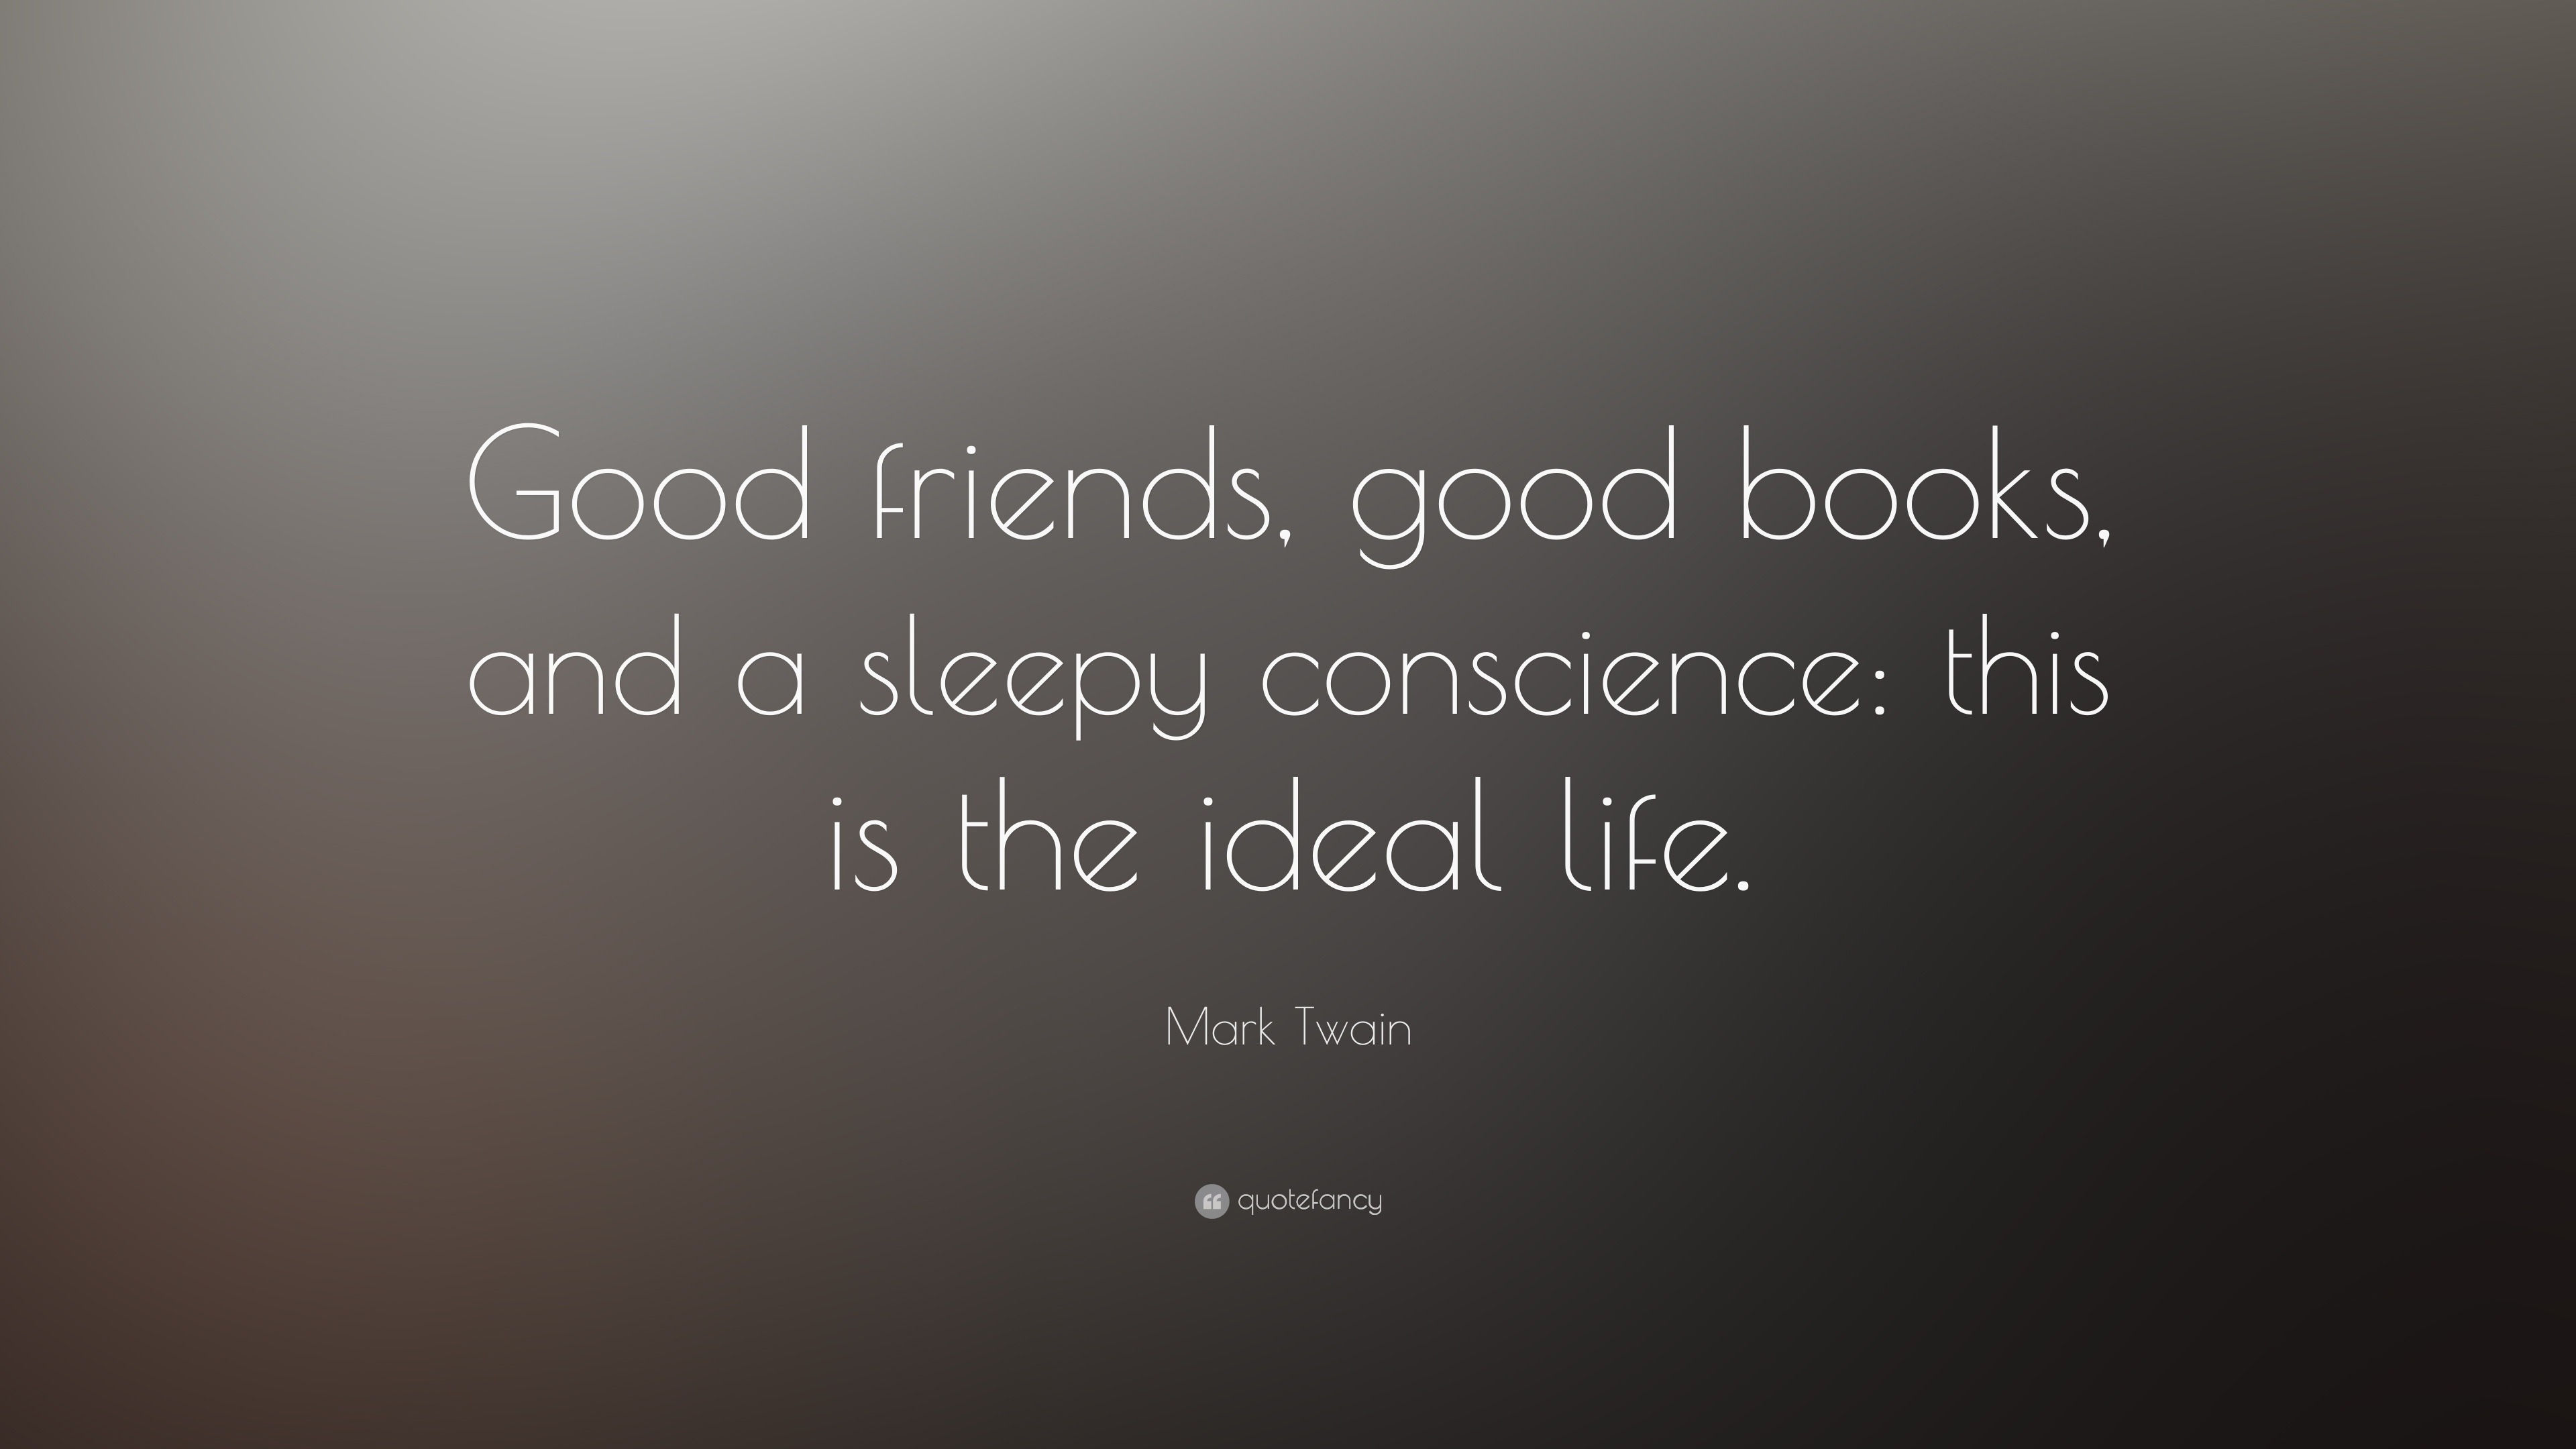 Mark Twain Quote “Good friends good books and a sleepy conscience